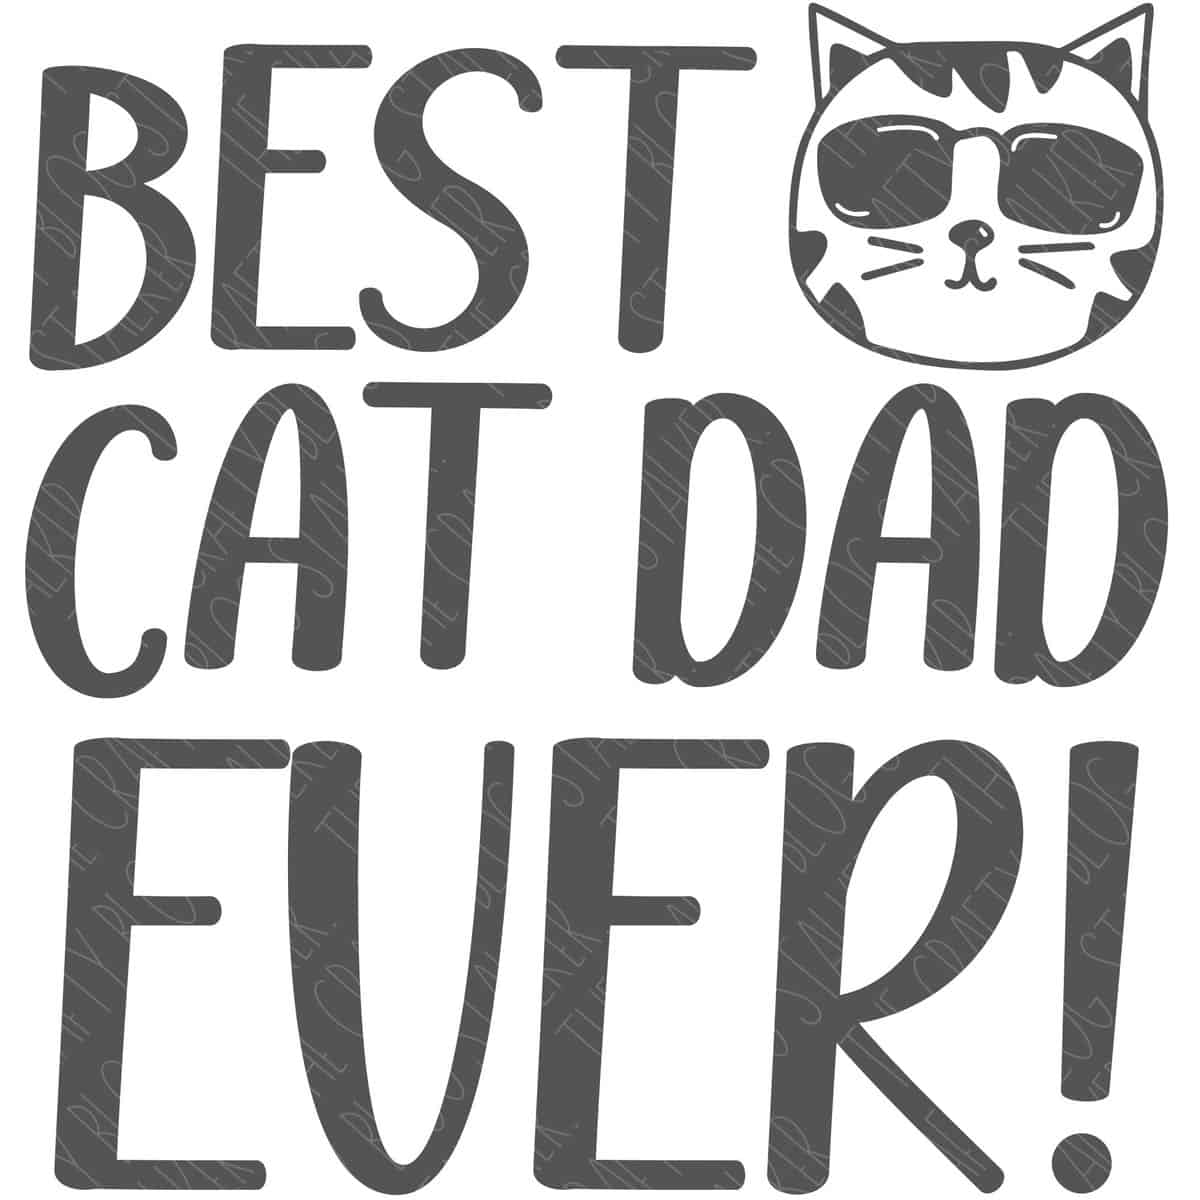 SVG Cut File: Best Cat Dad.